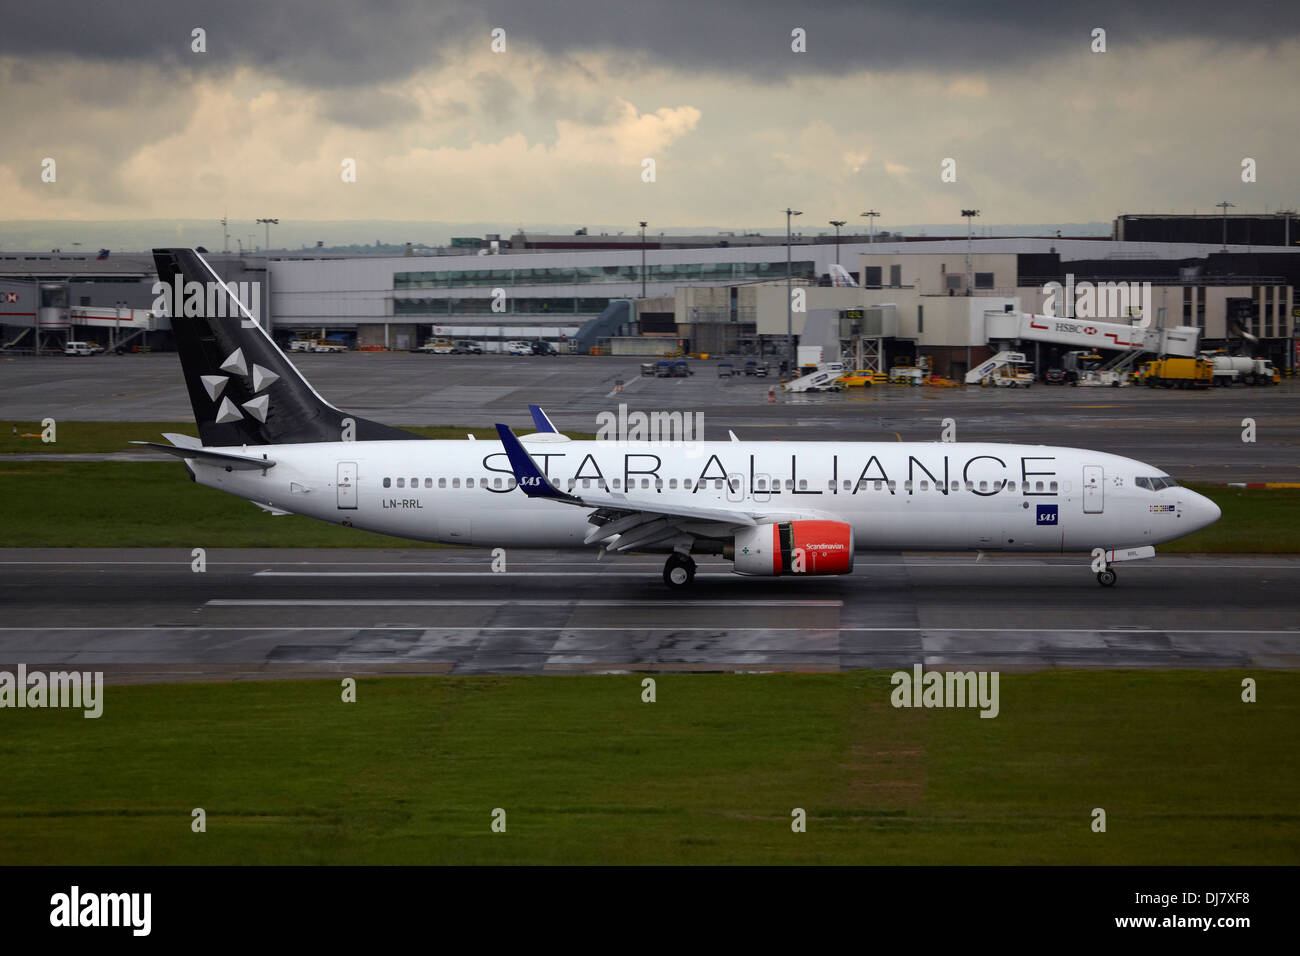 Star Alliance Boeing 737 landing at London Heathrow Airport Stock Photo